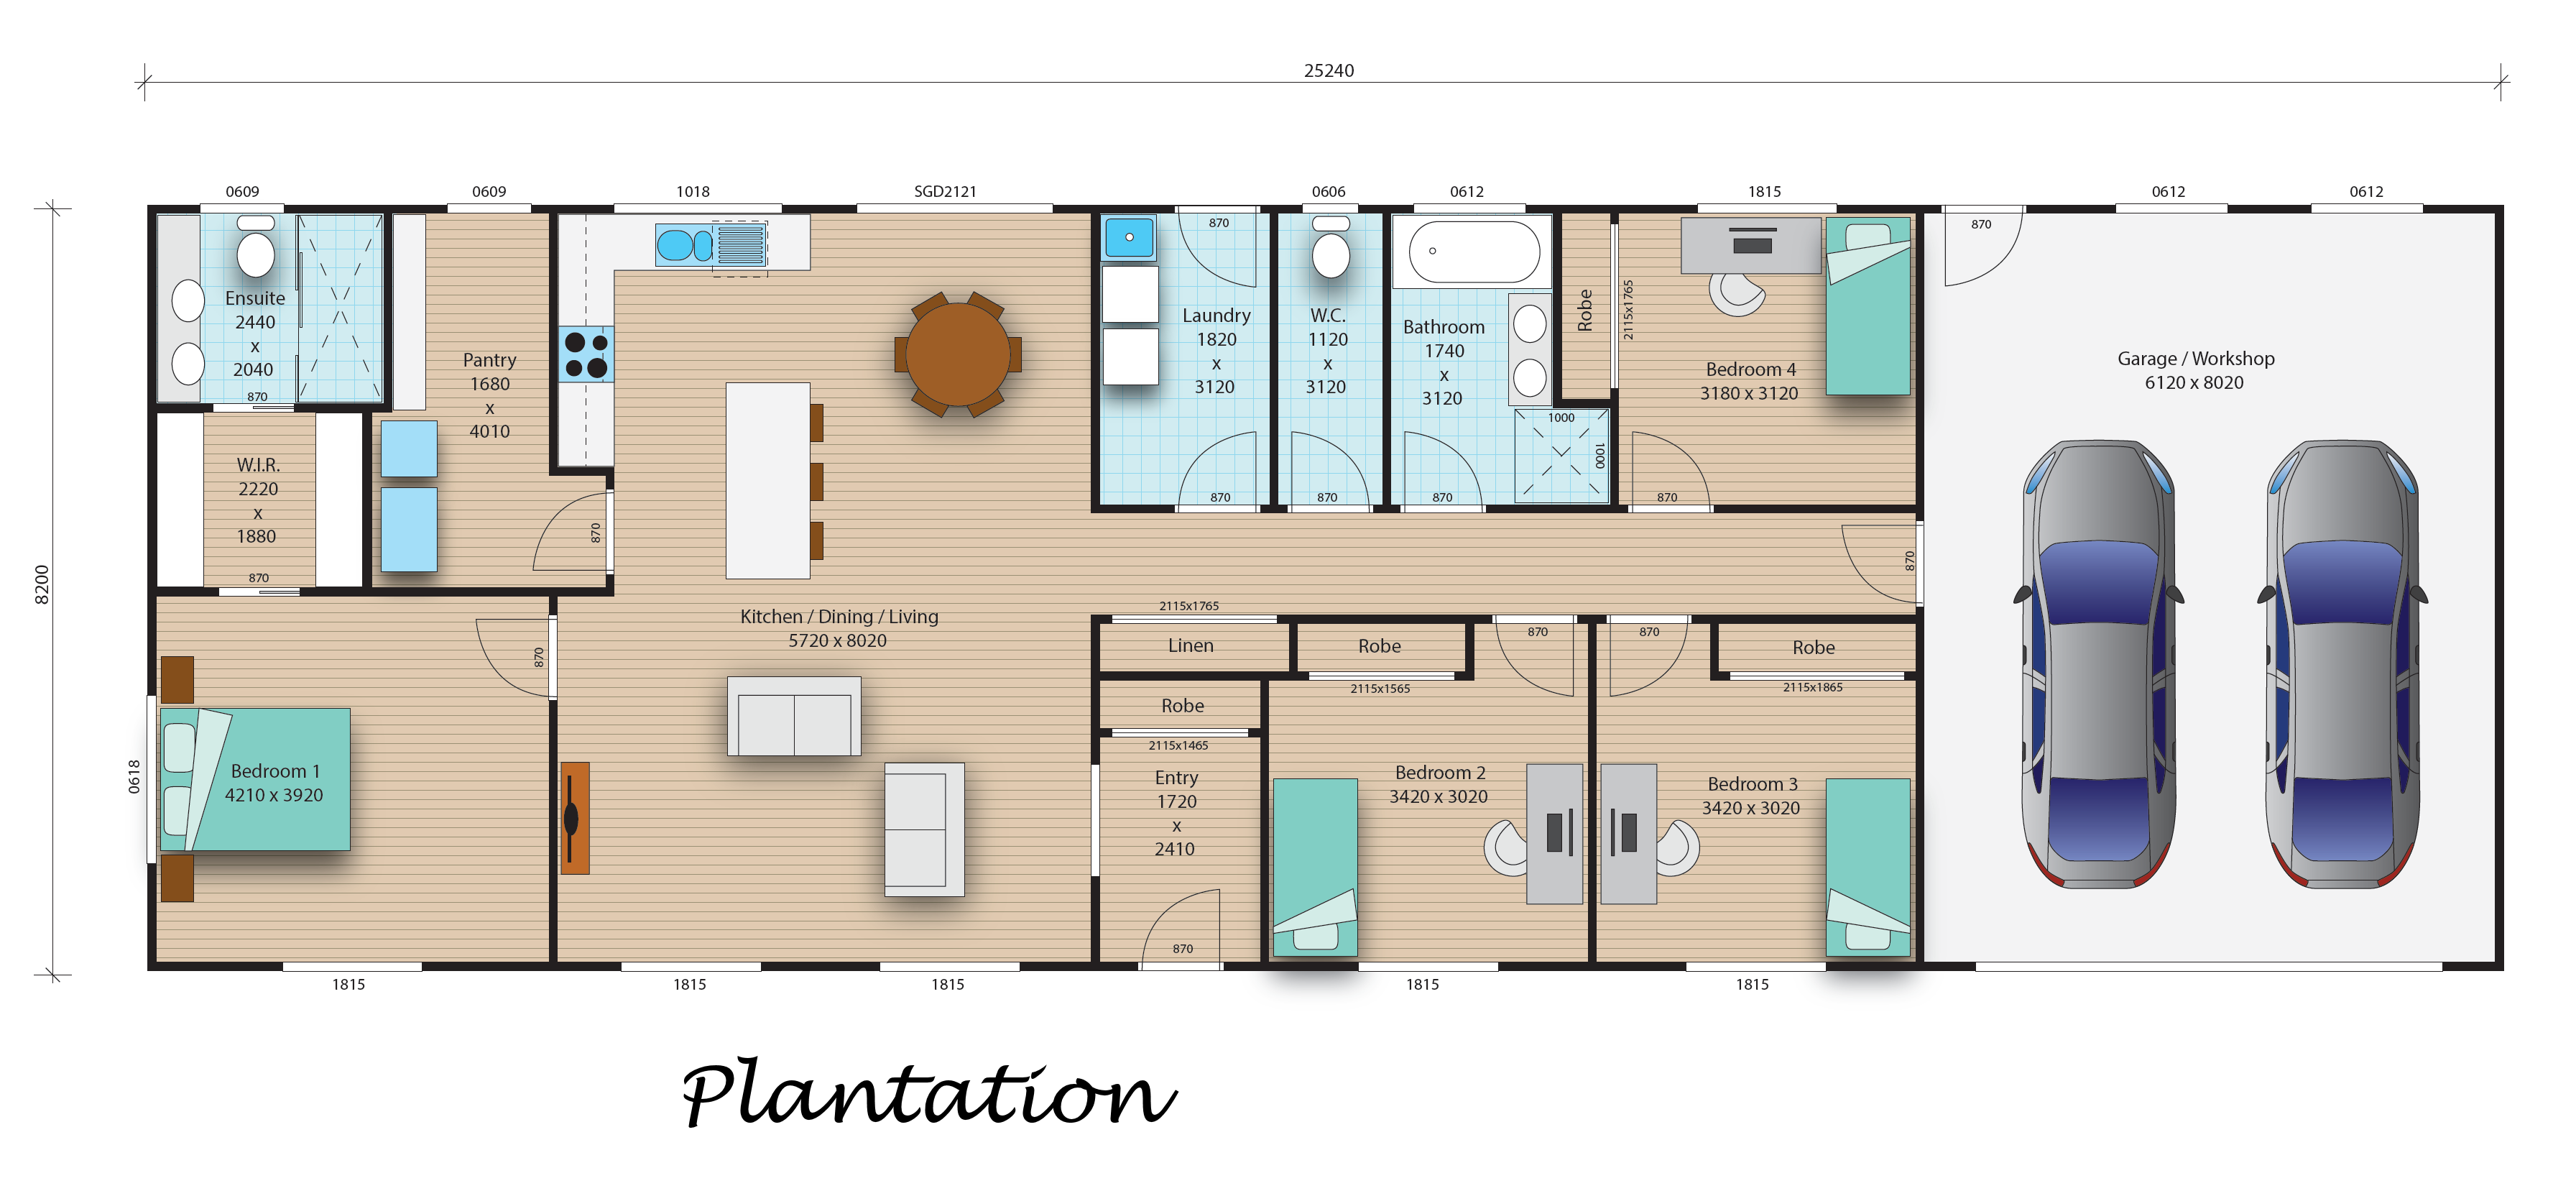 Plantation floorplan image